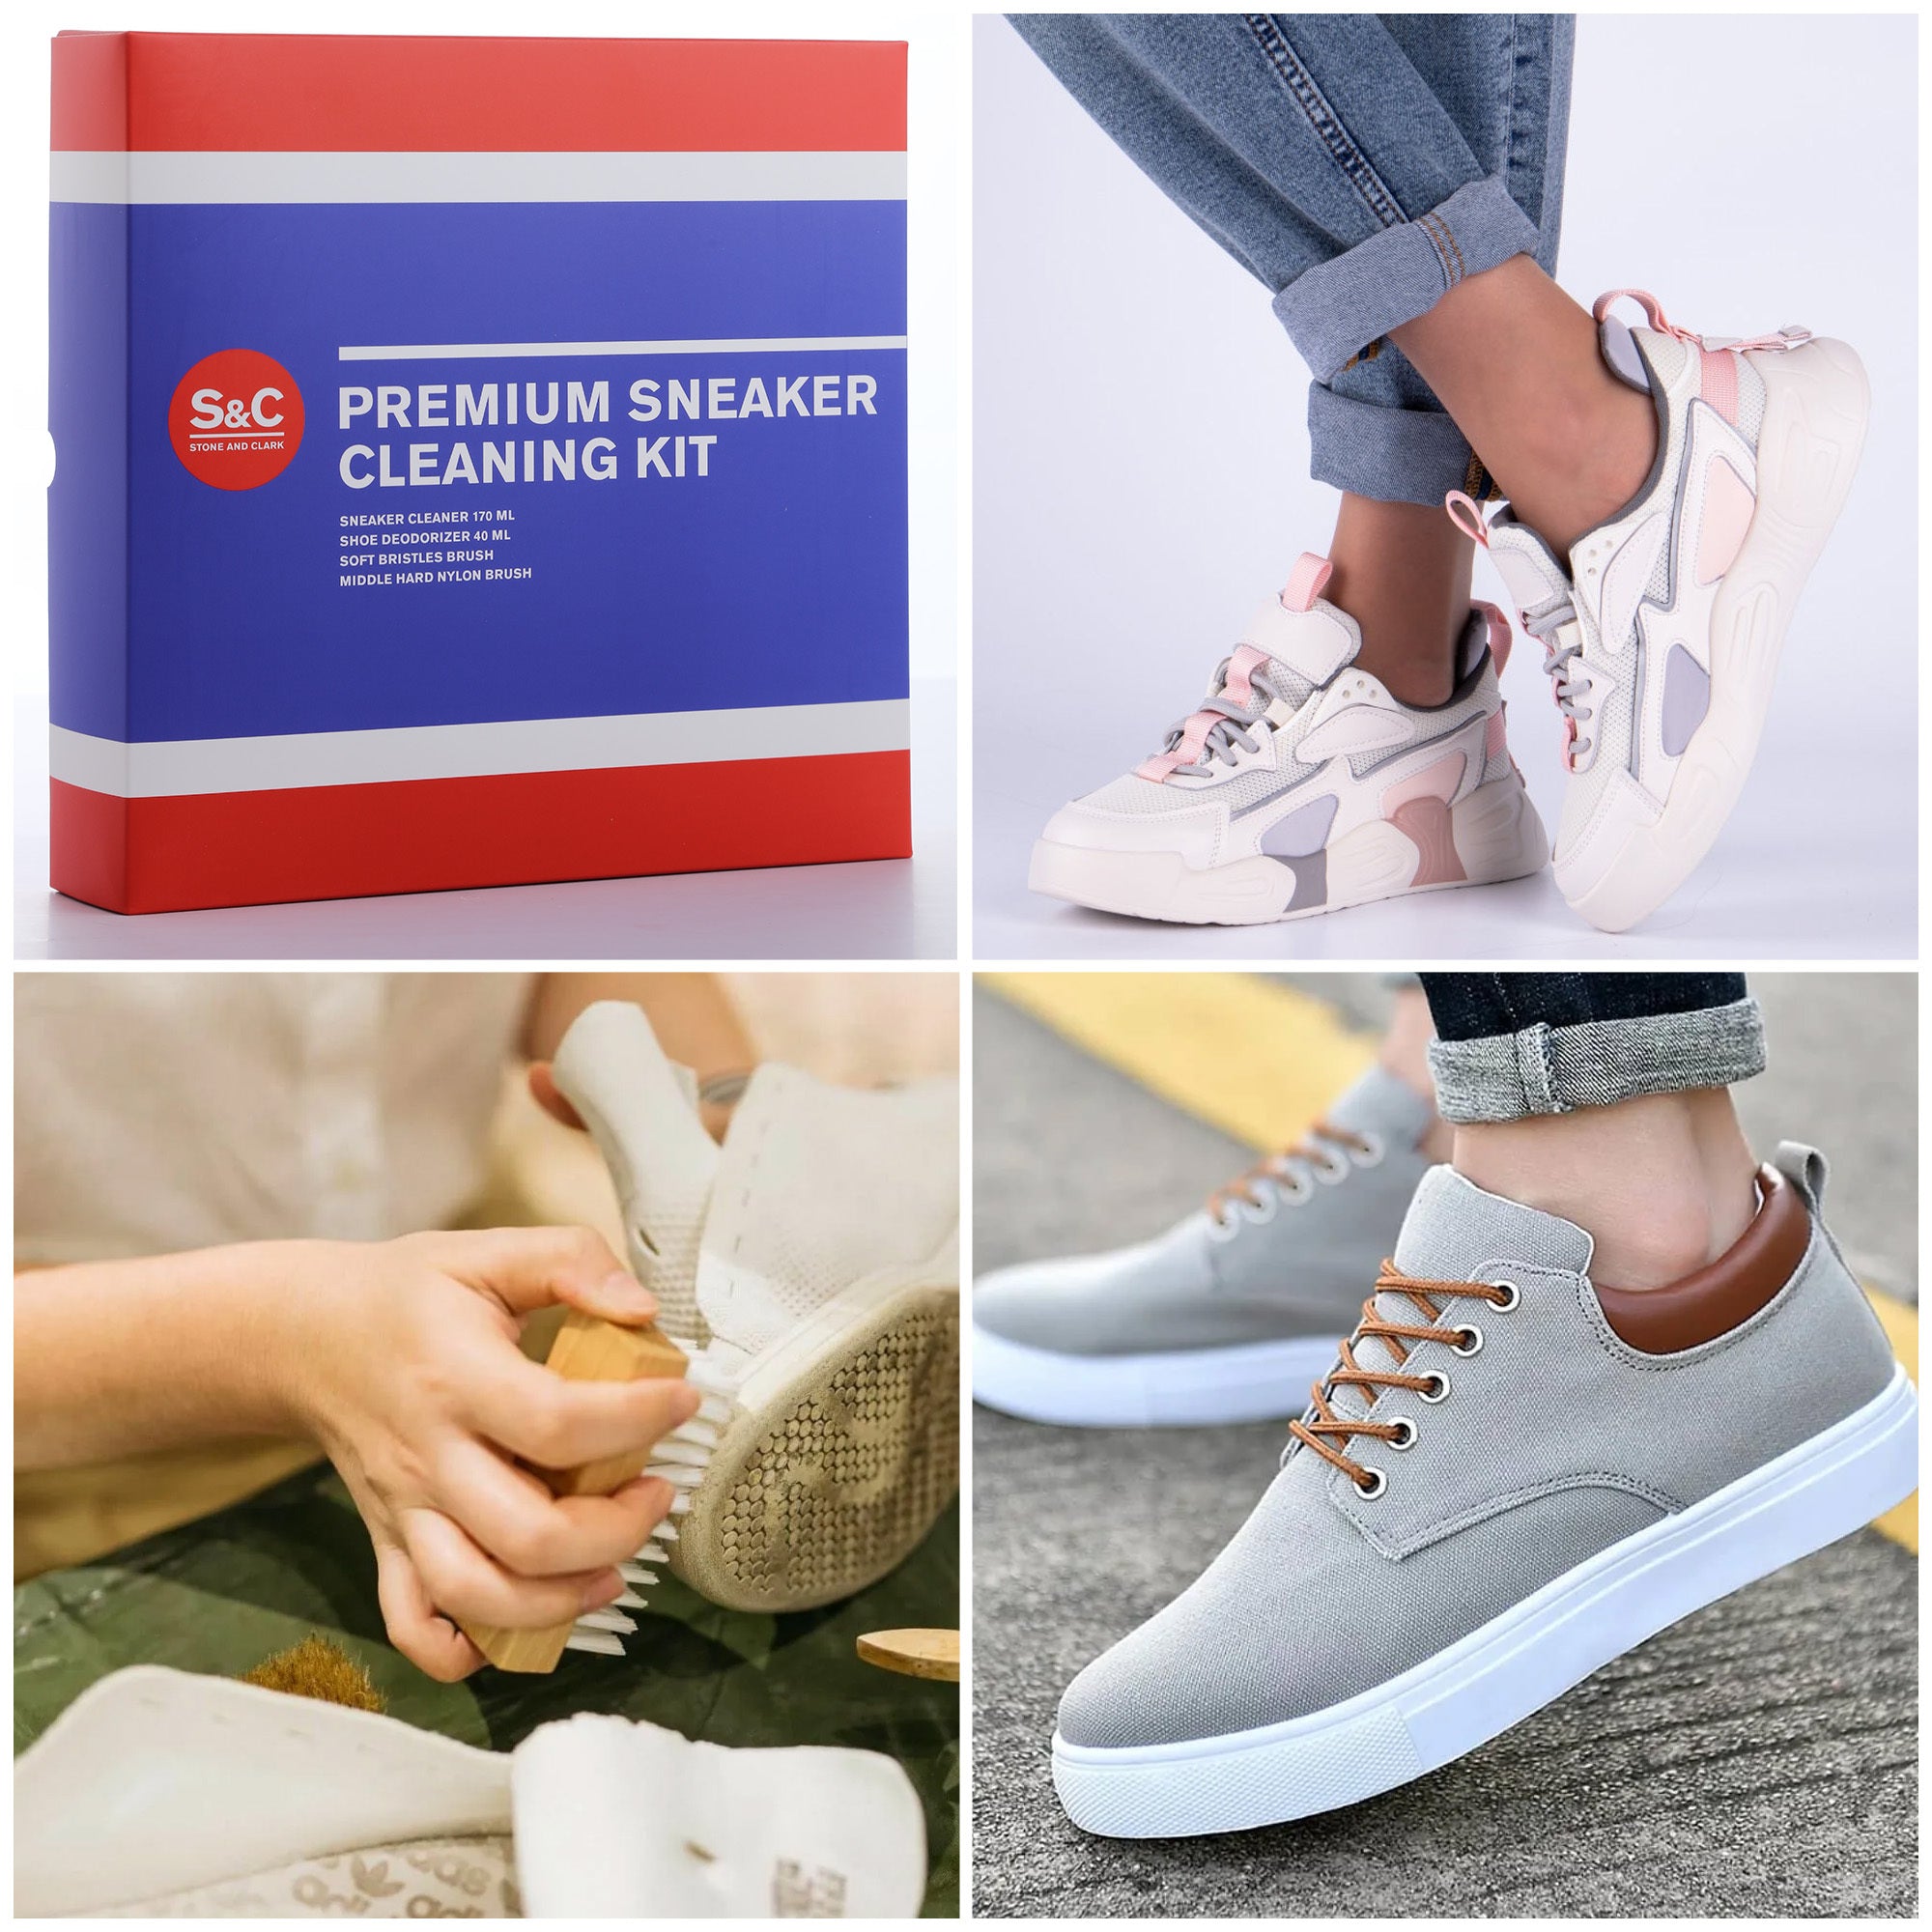 The Shoe Cleaning Kit Sneakerheads Swear By